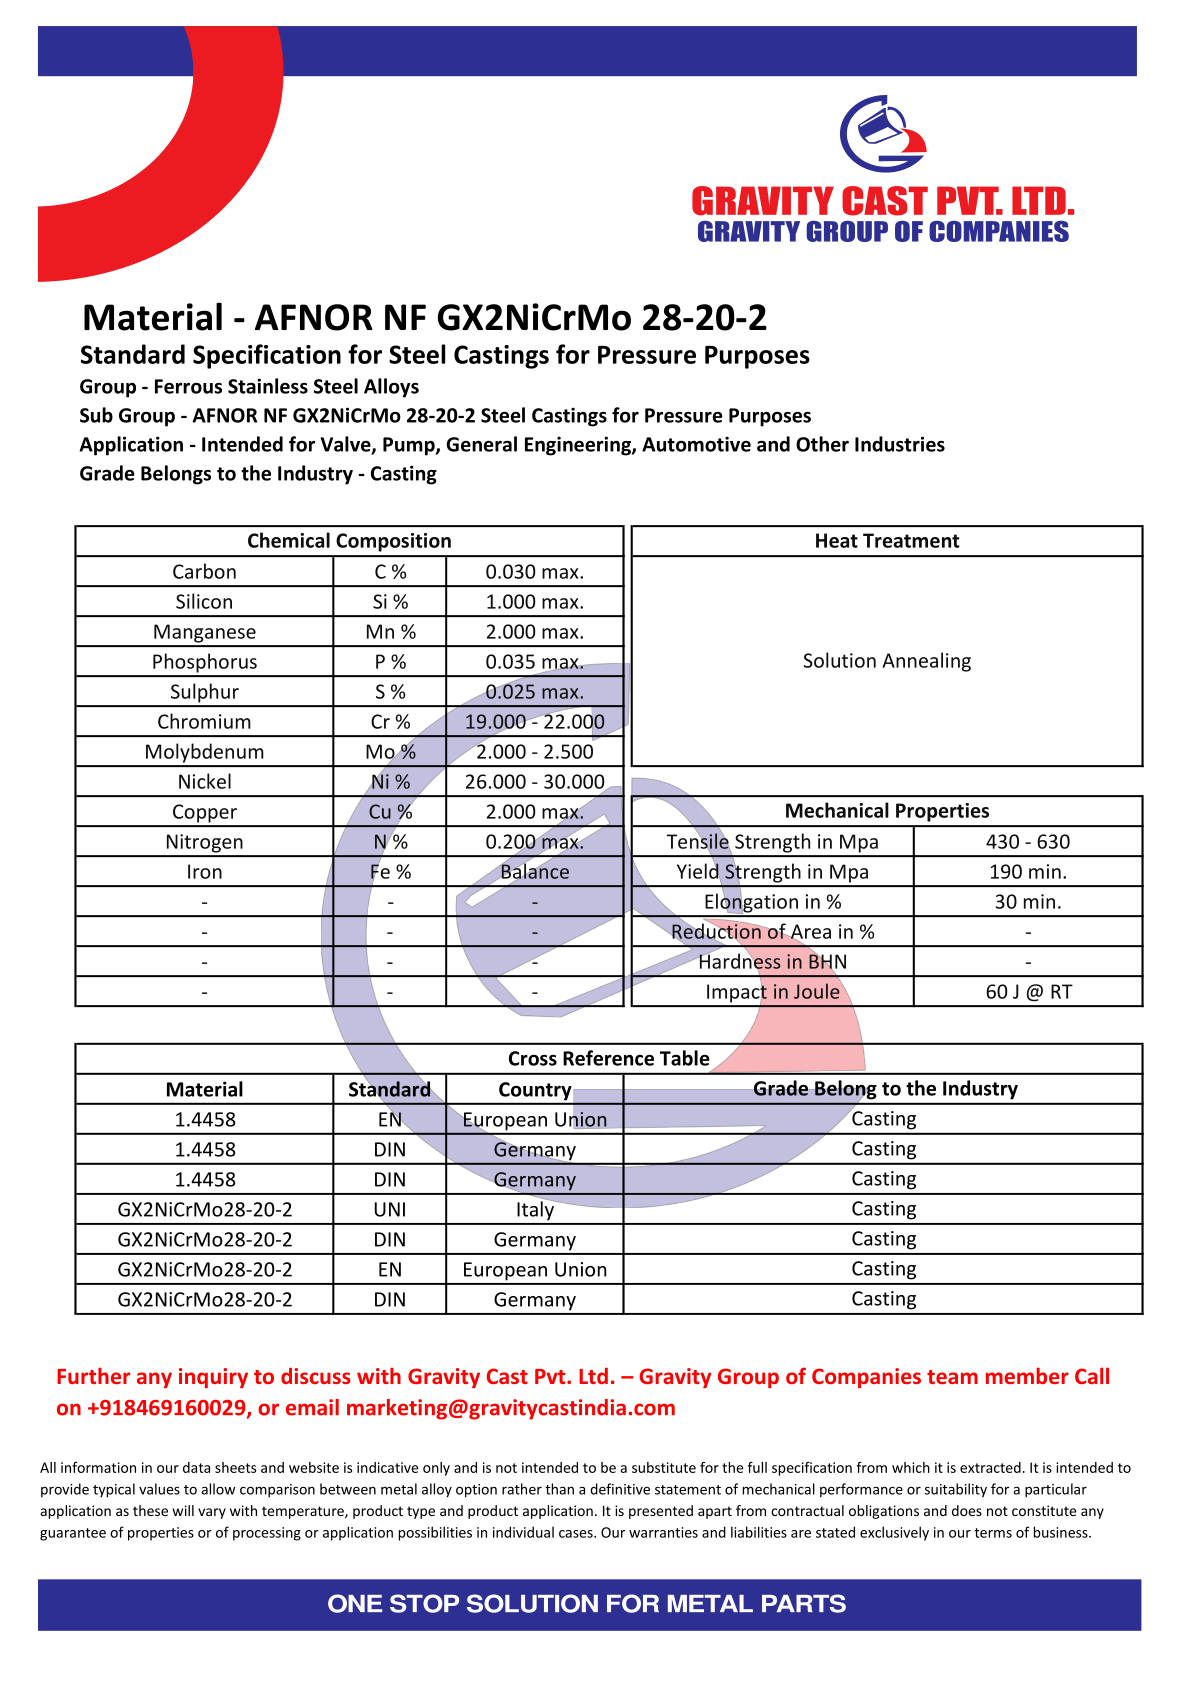 AFNOR NF GX2NiCrMo 28-20-2.pdf